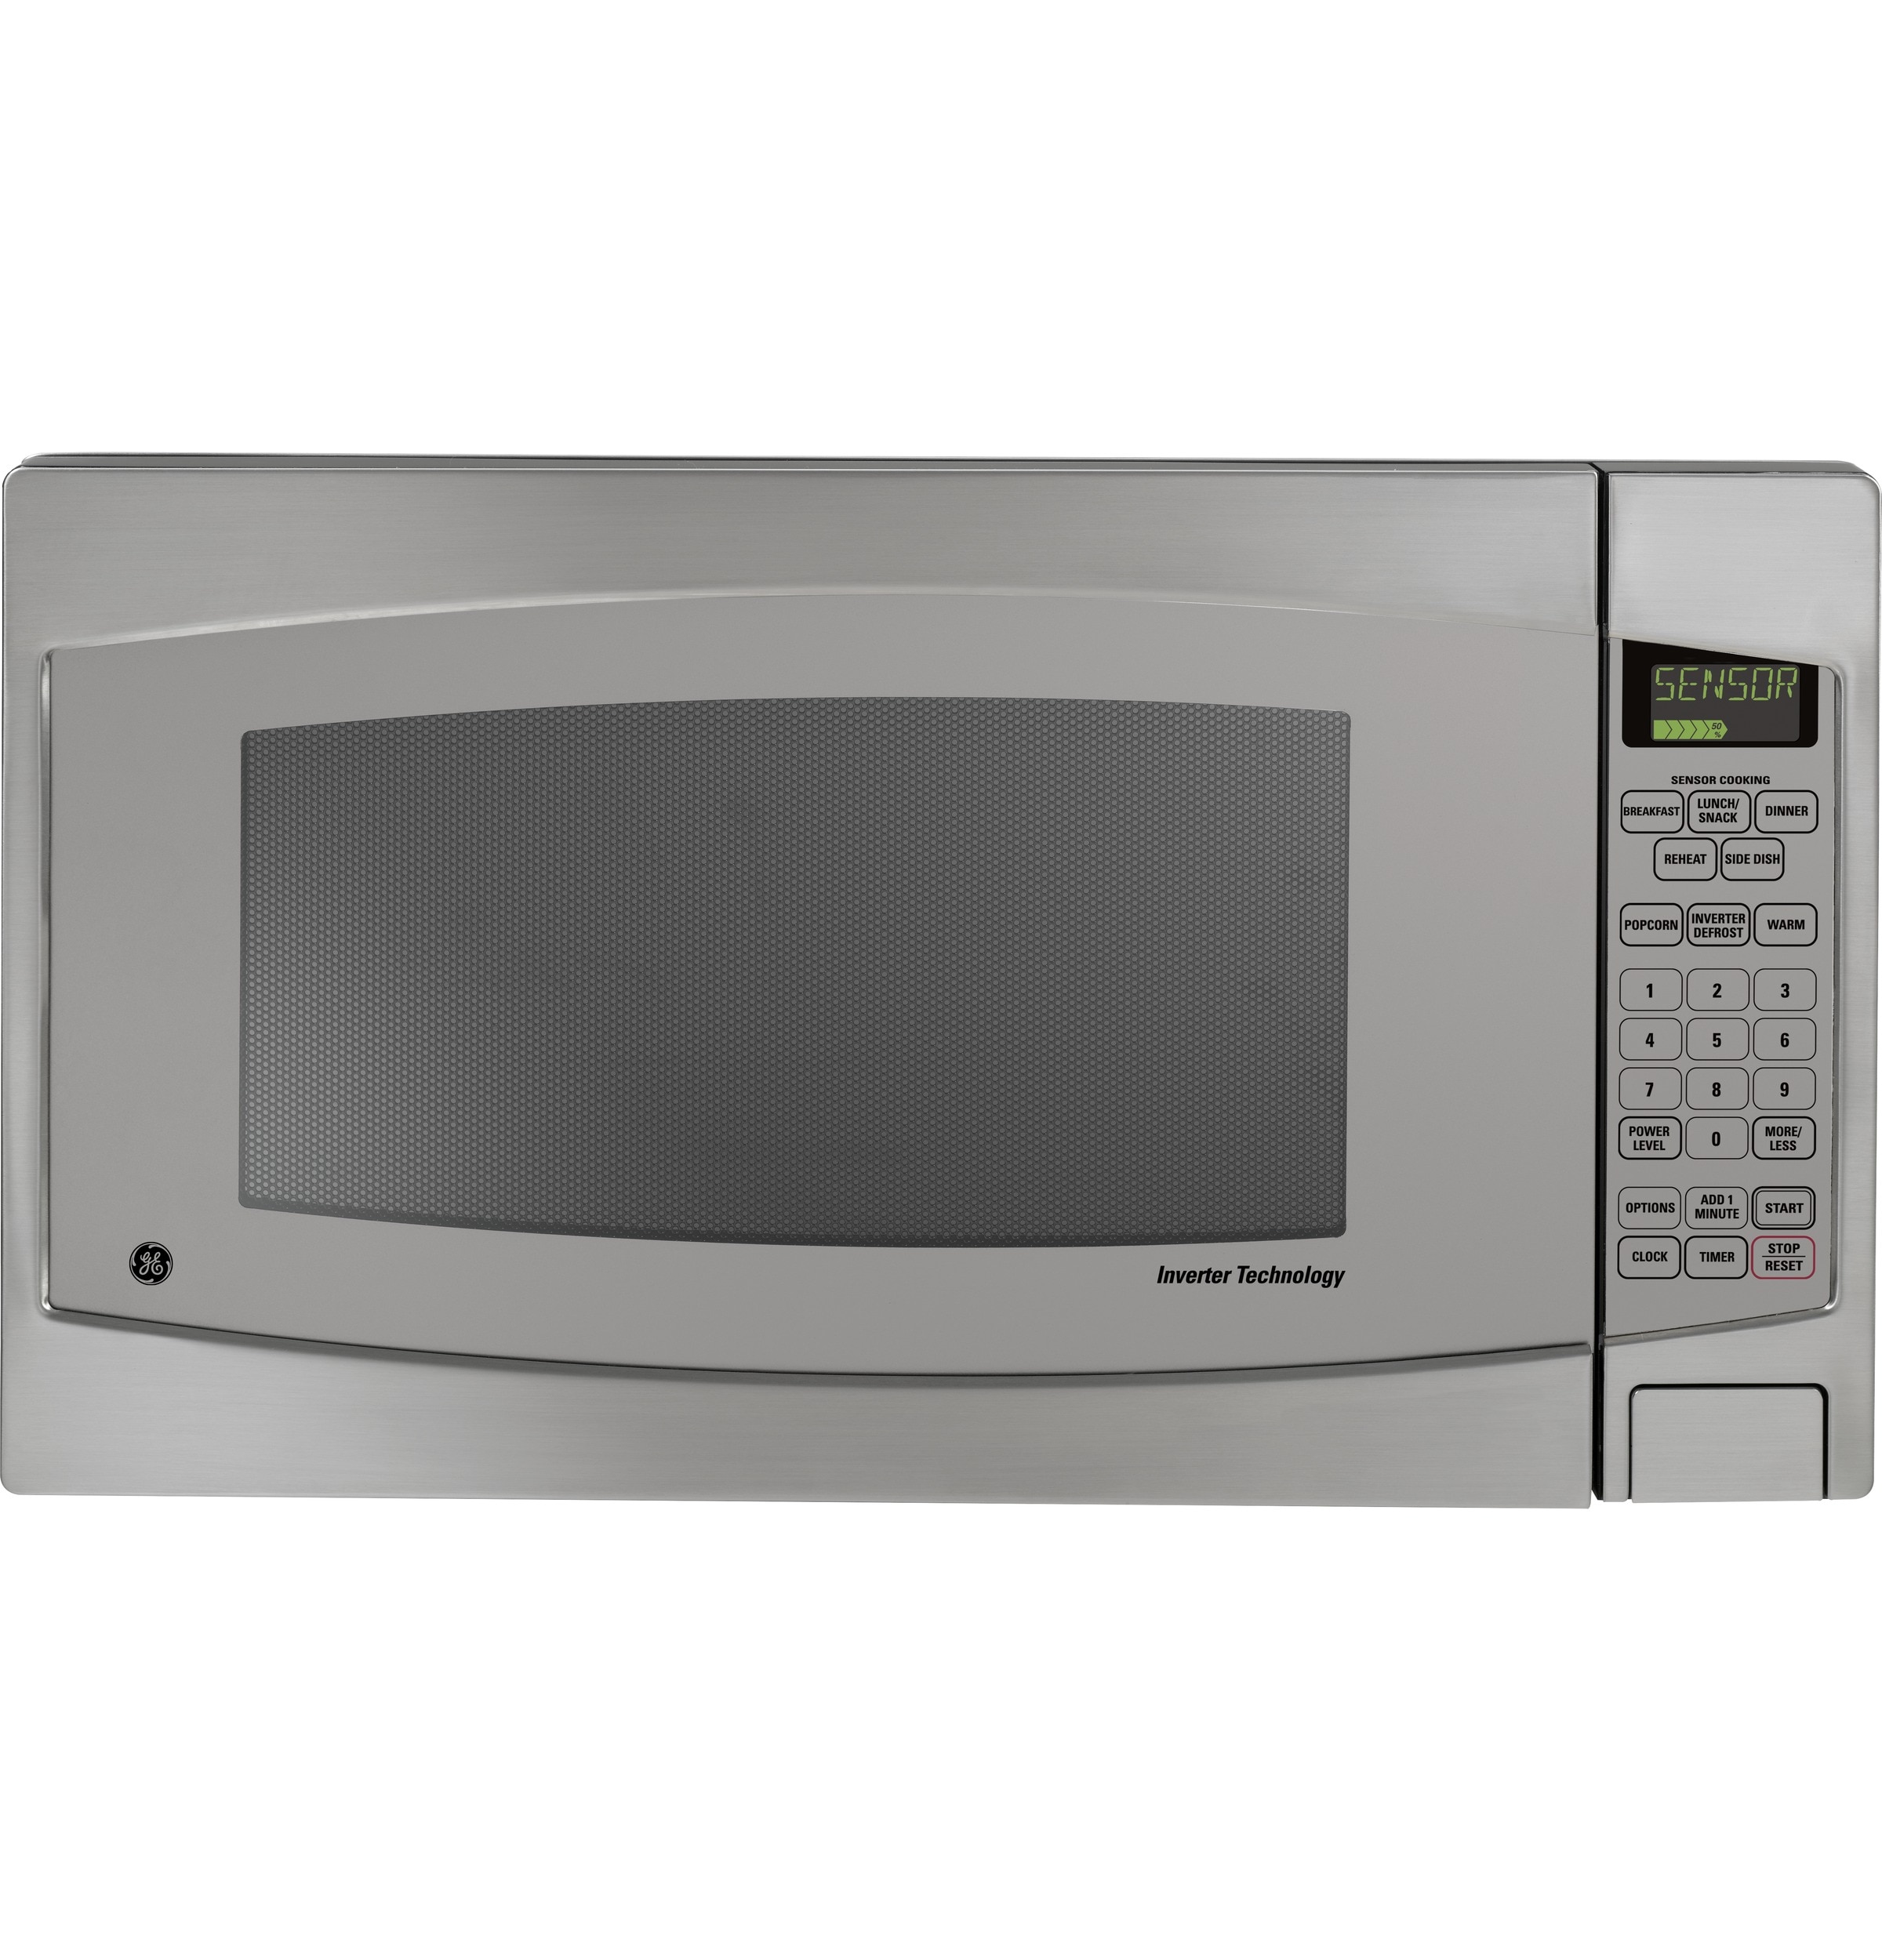 24 Countertop Microwave Oven - 1200 Watt Stainless Steel